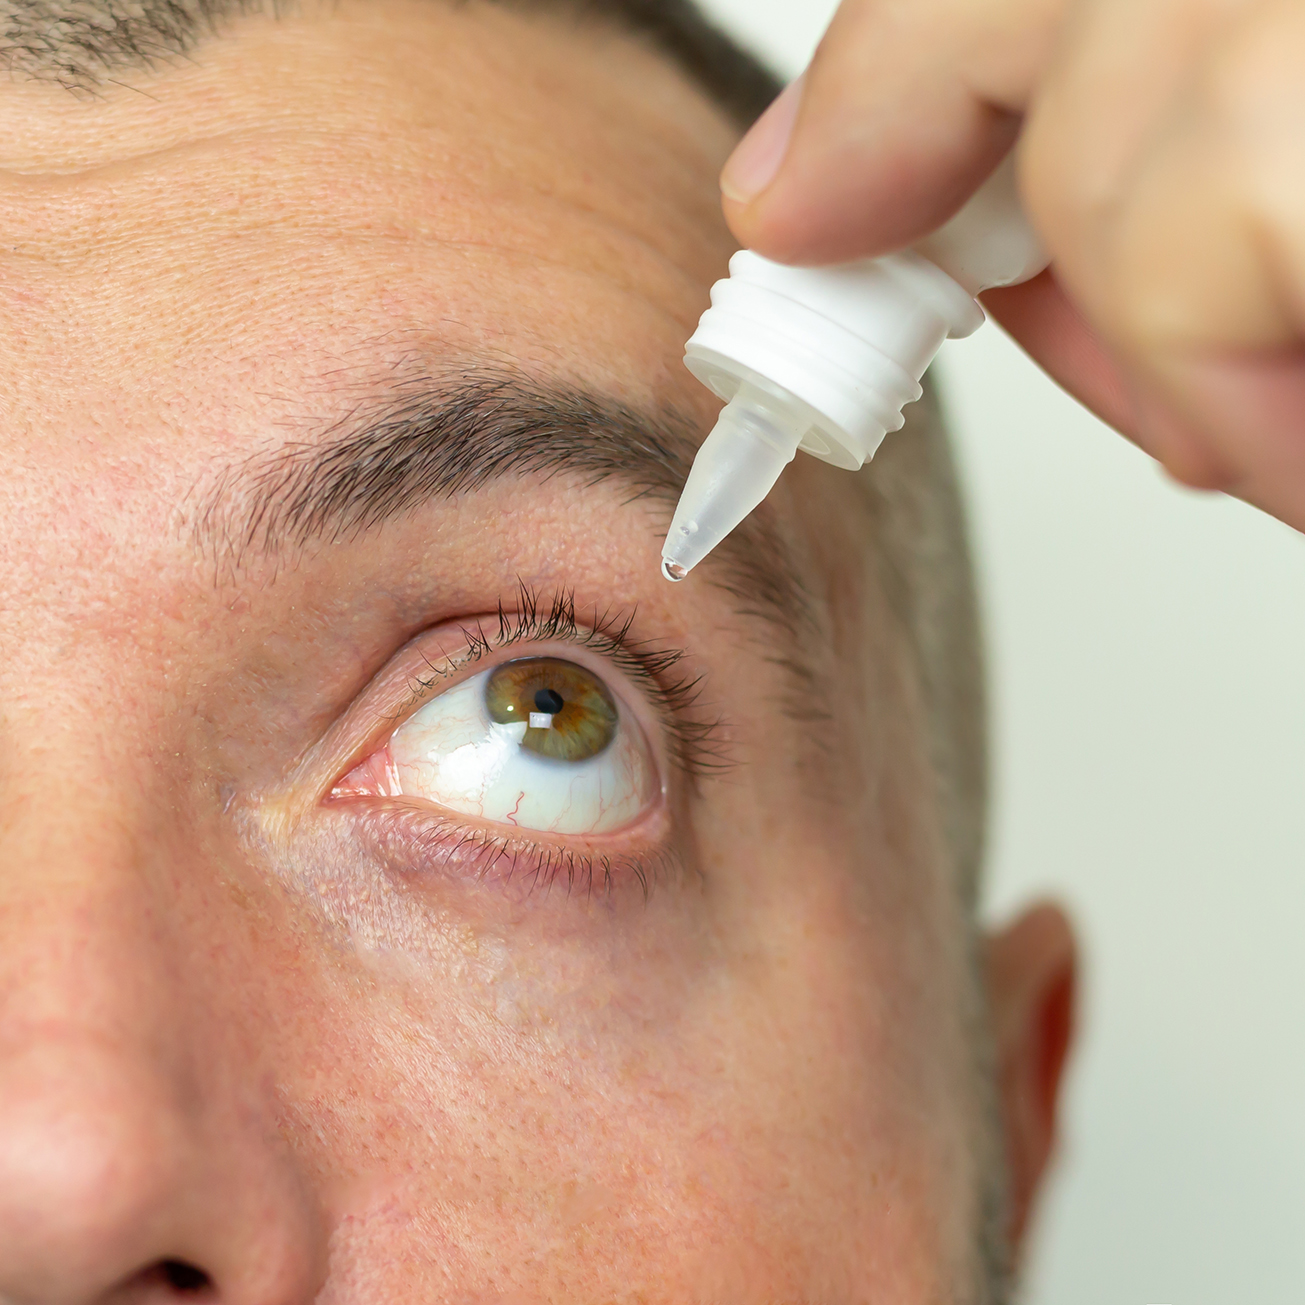 Man applying liquid eye drops in his eye solving vision problem close-up